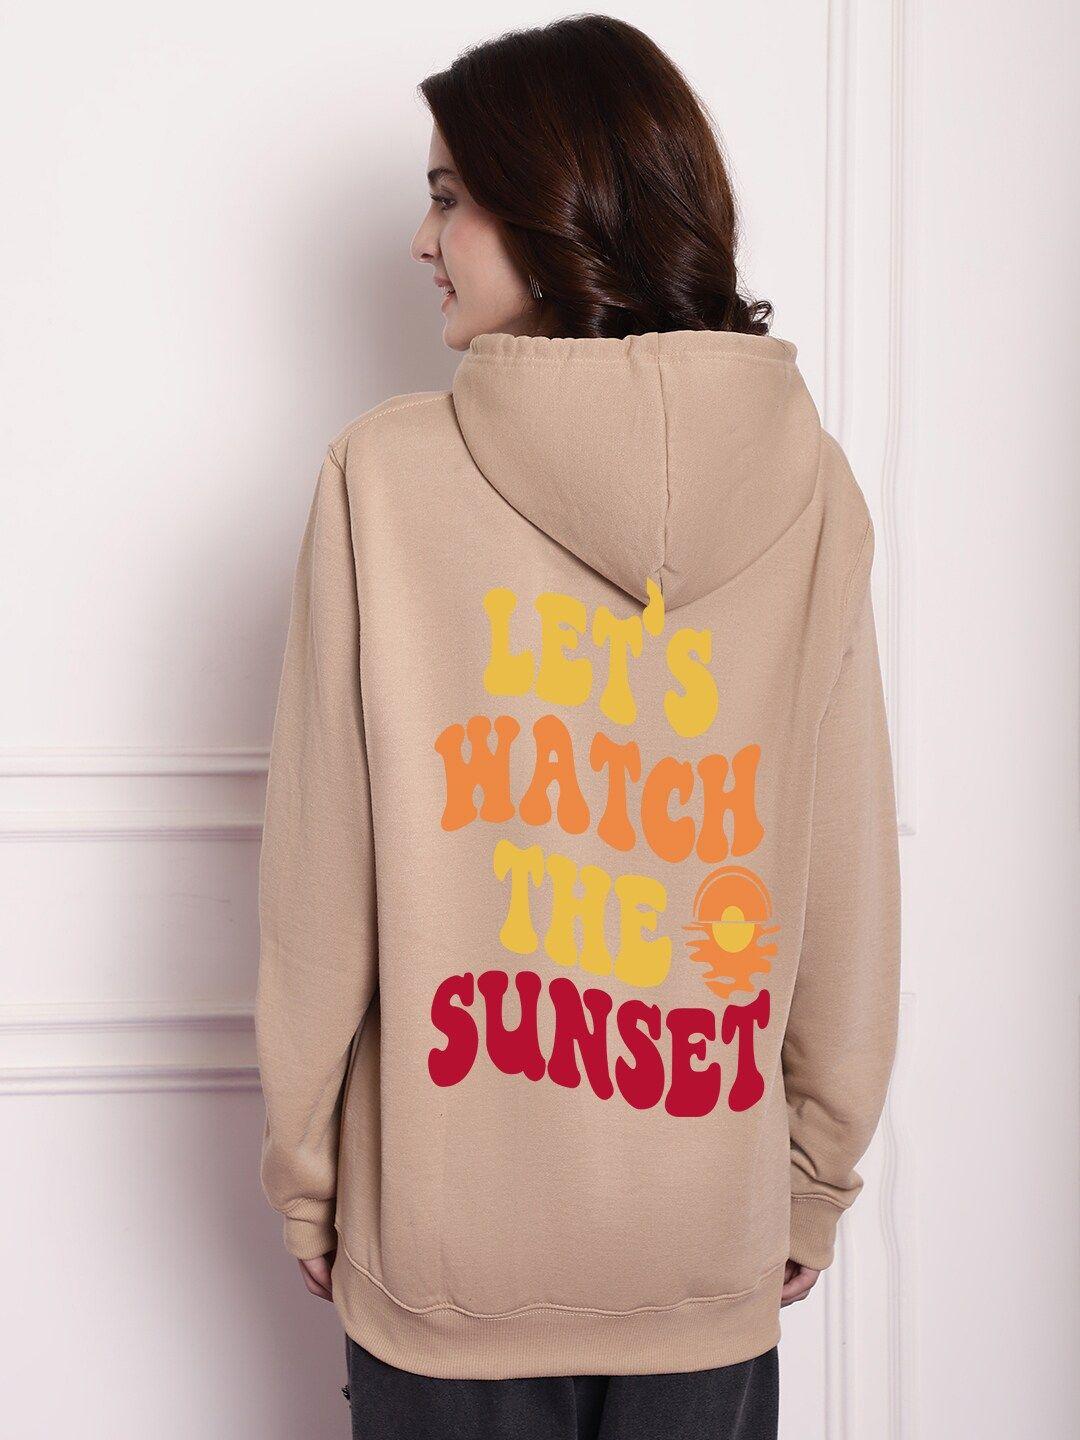 imsa moda typography printed hooded fleece pullover